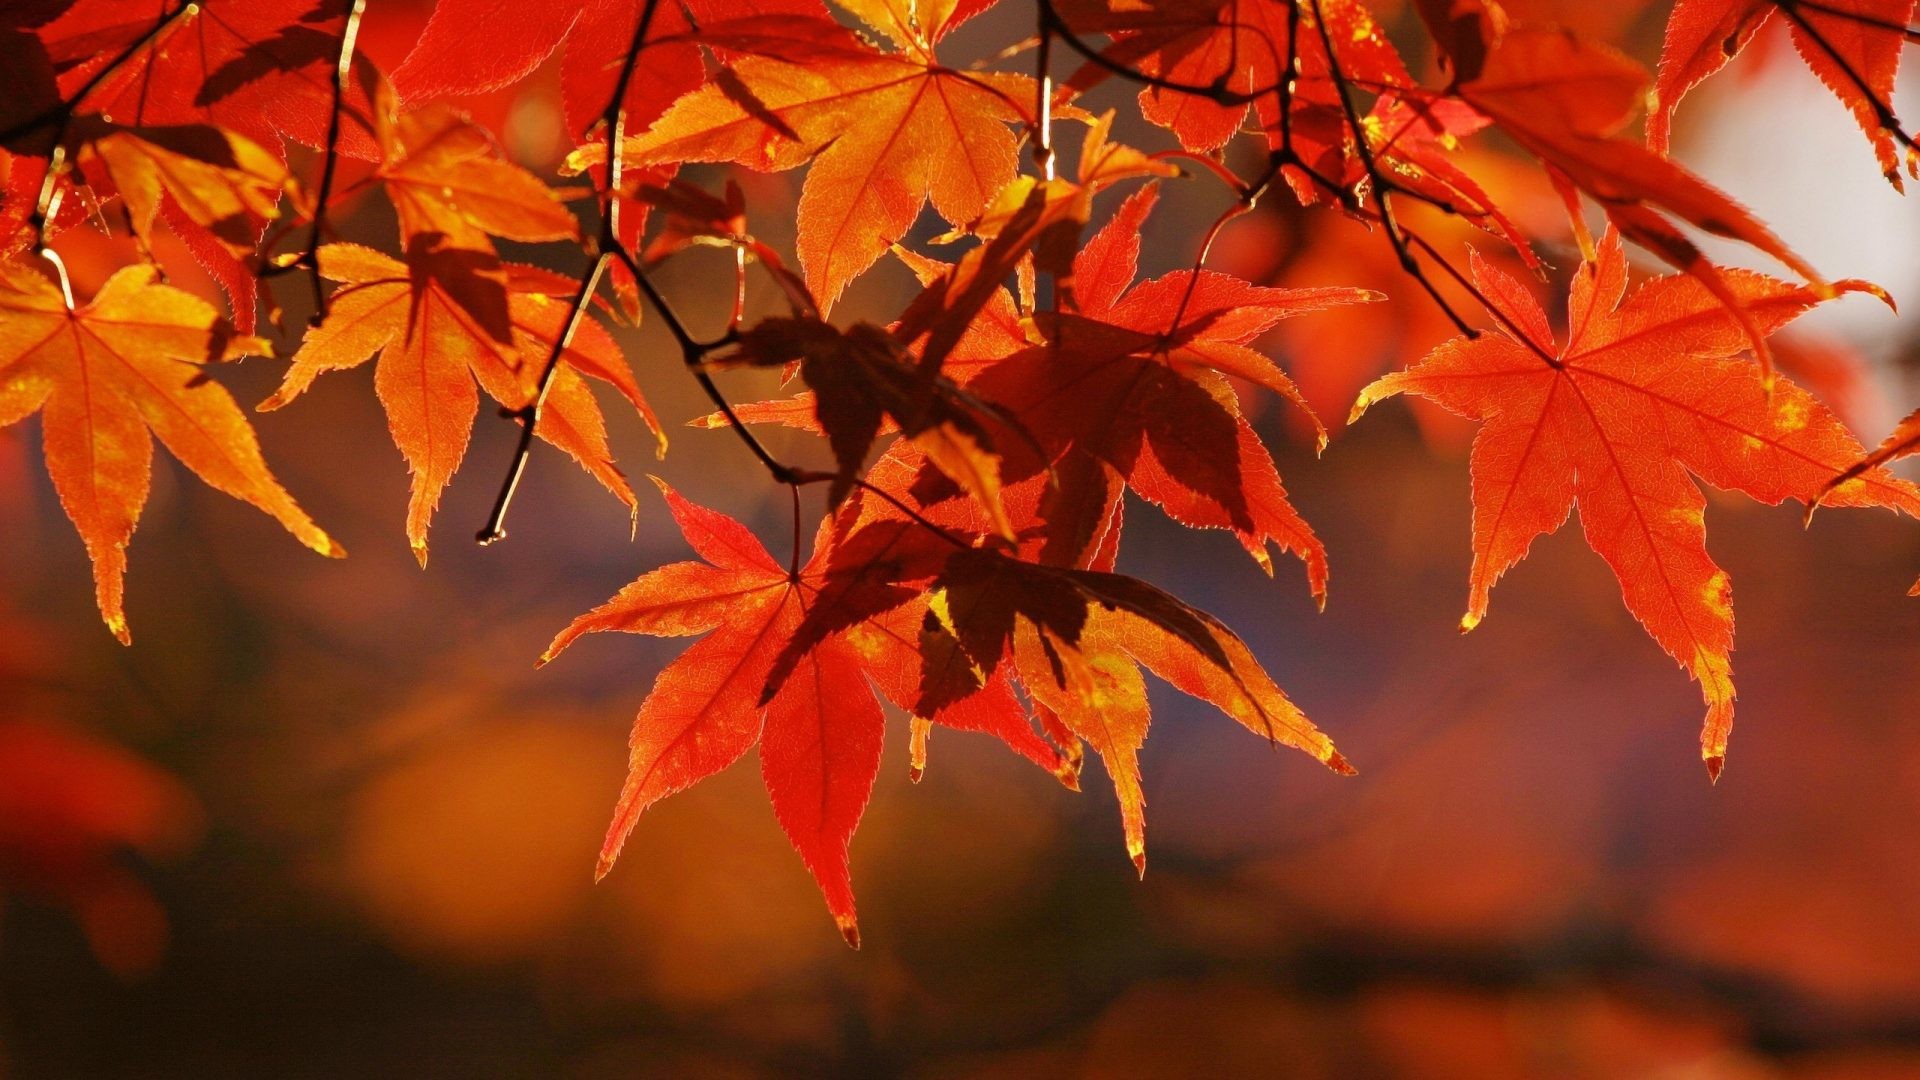 1920x1080 Season Tag - Fall Leaves Season Autumn Colors Tree Free Desktop Wallpaper  for HD 16: